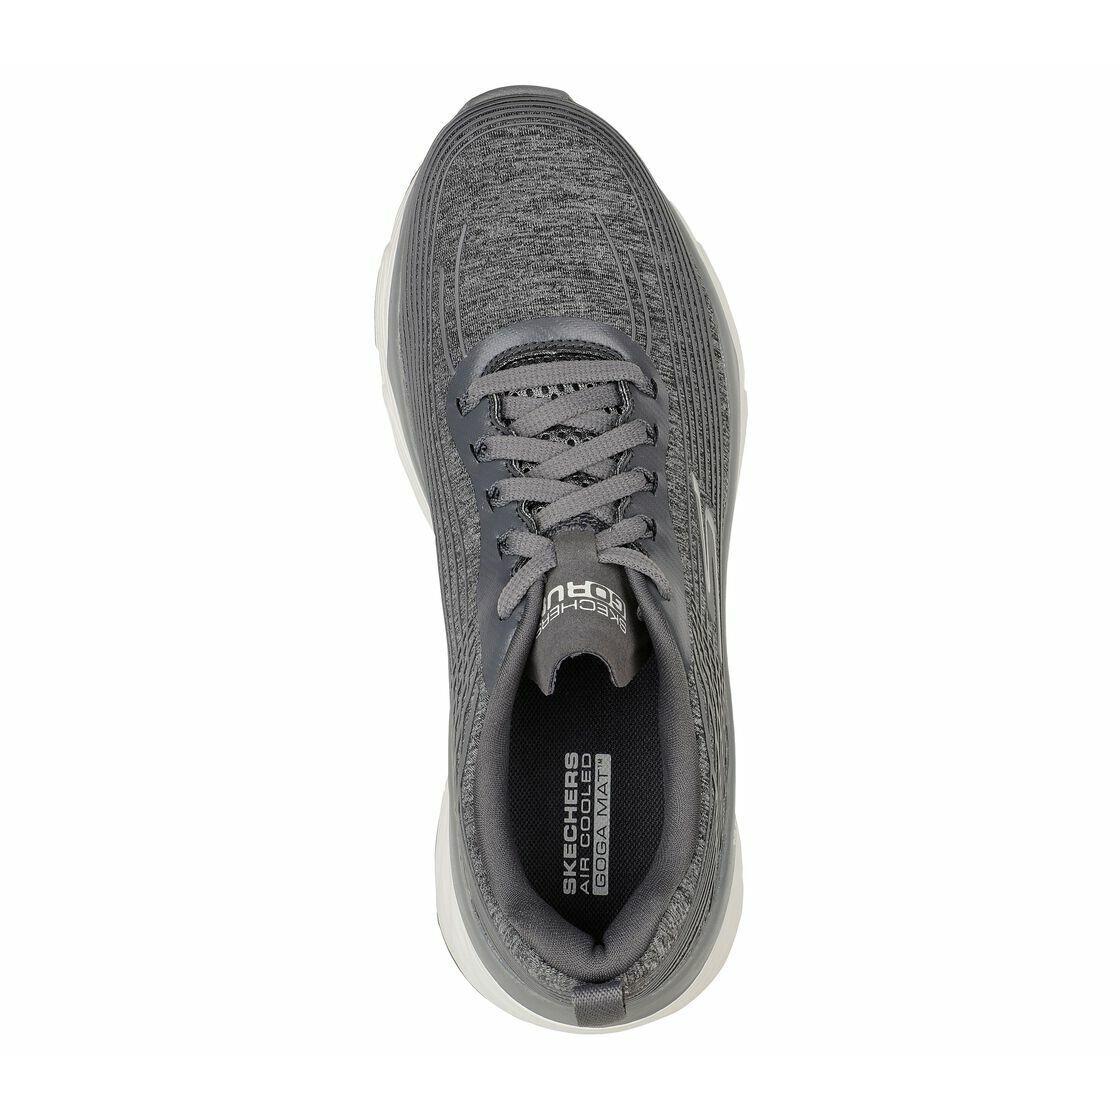 Skechers shoes Max Cushioning - Gray 0